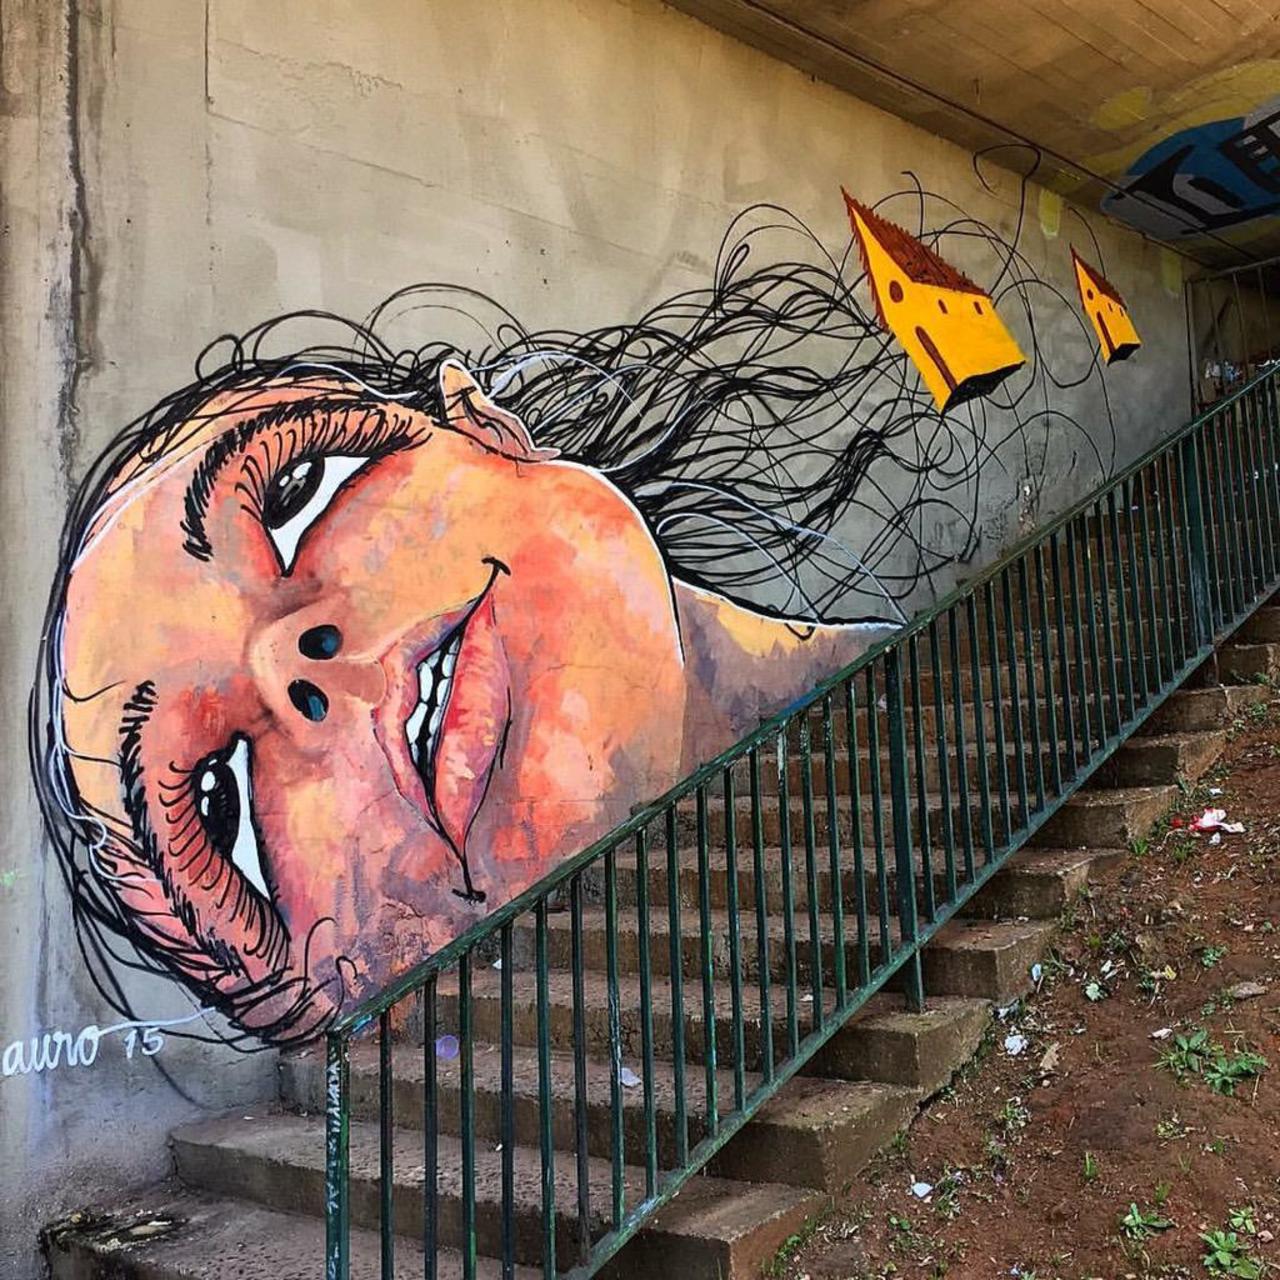 Street Art by Reveracidade in São Paulo 

#art #graffiti #mural #streetart http://t.co/XRwHr4w68Q